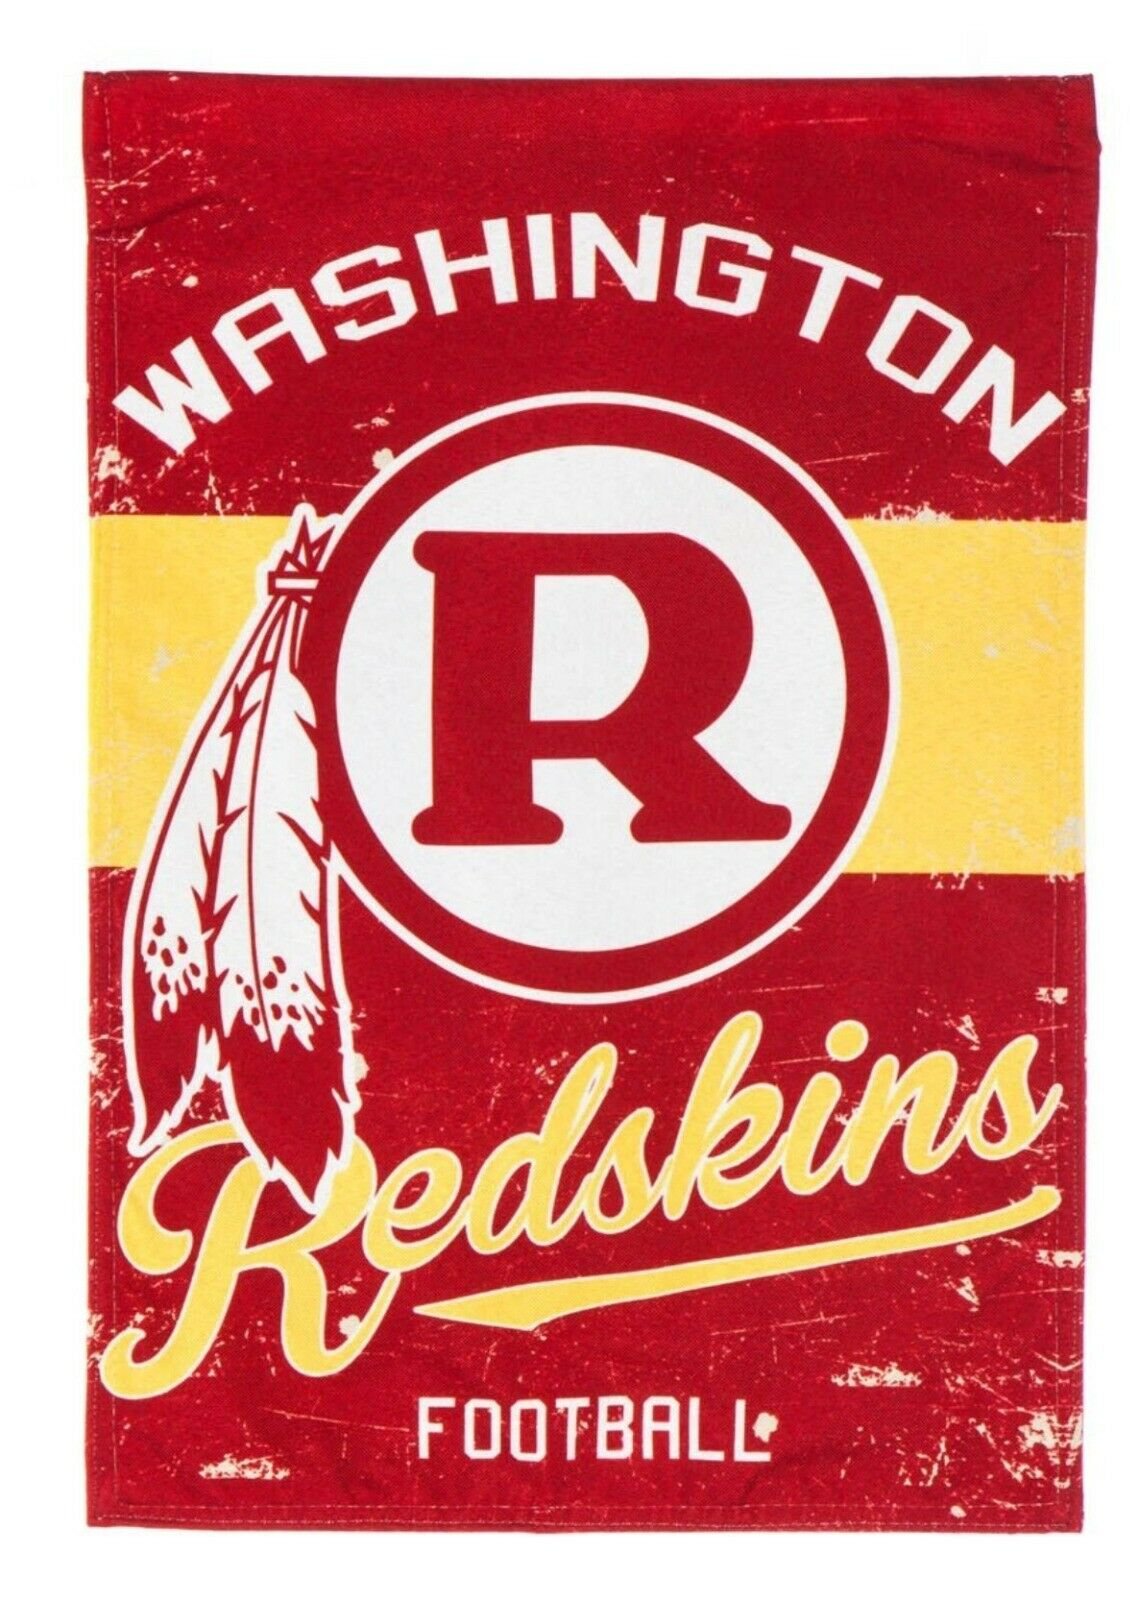 Washington Redskins Commanders Premium House Flag Banner, Double Sided, Retro Vintage Style, Linen, 28x44 Inch